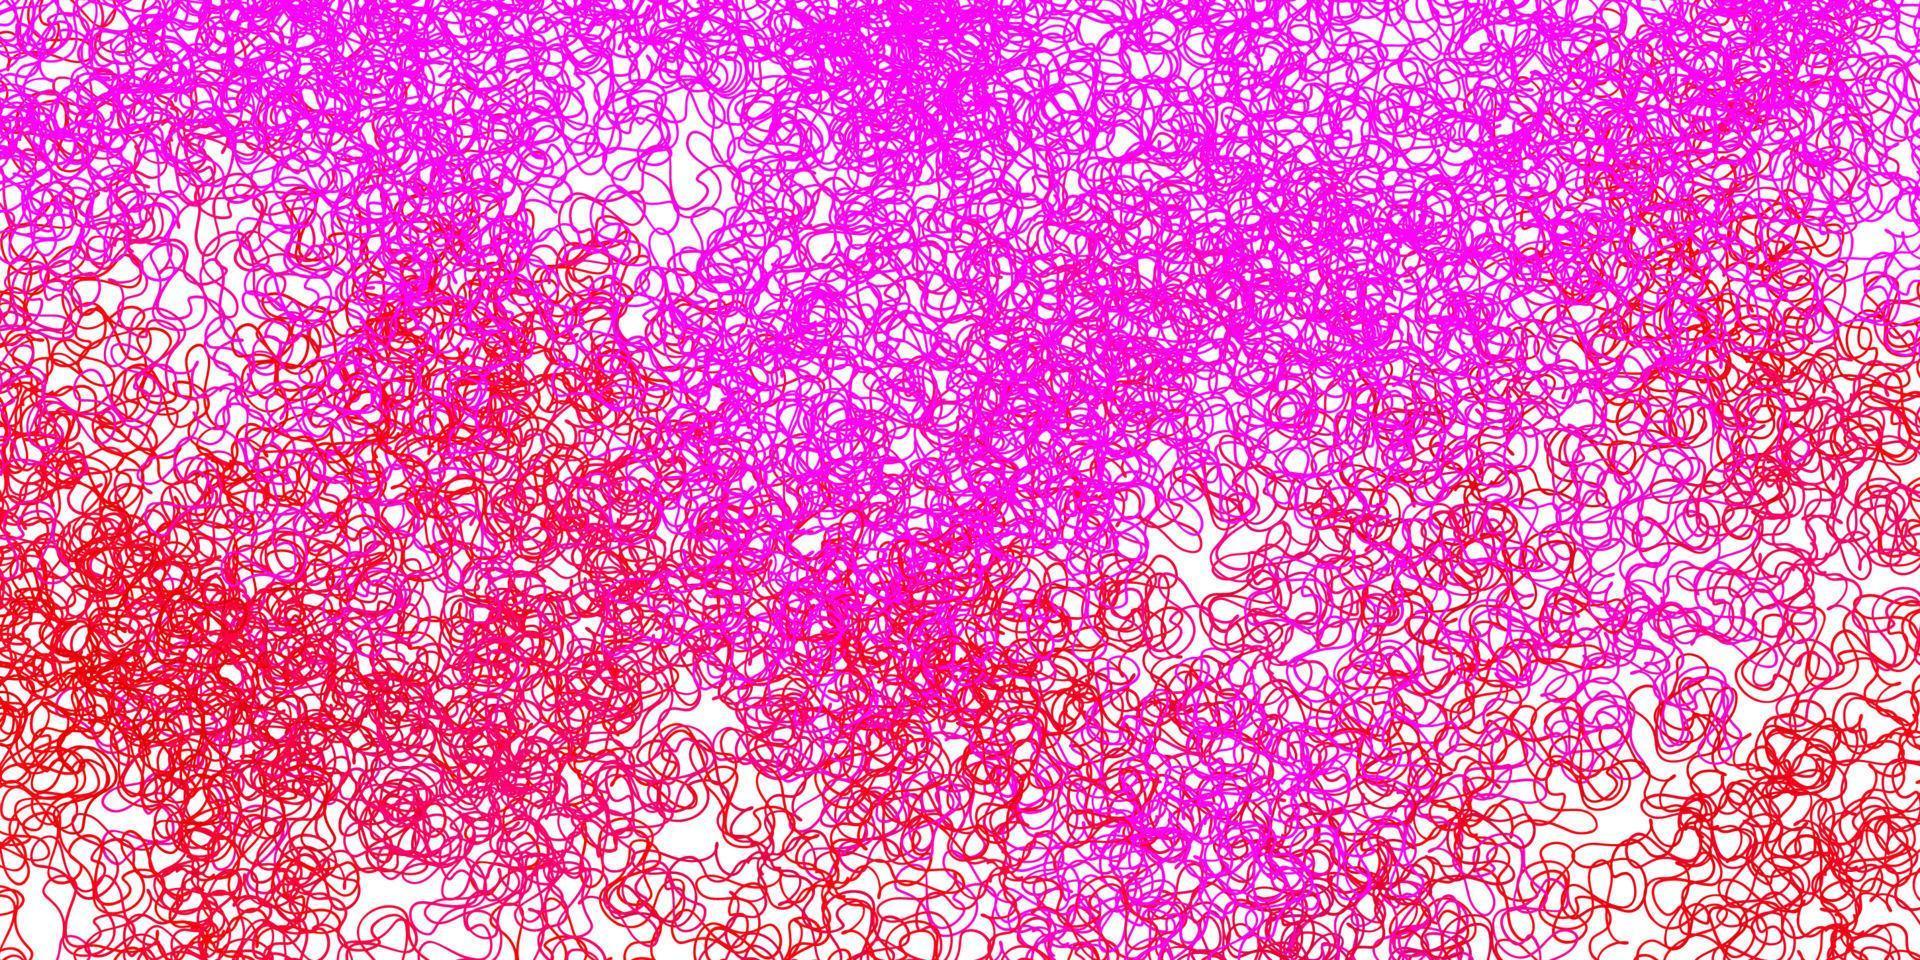 textura vector rosa escuro com curvas.